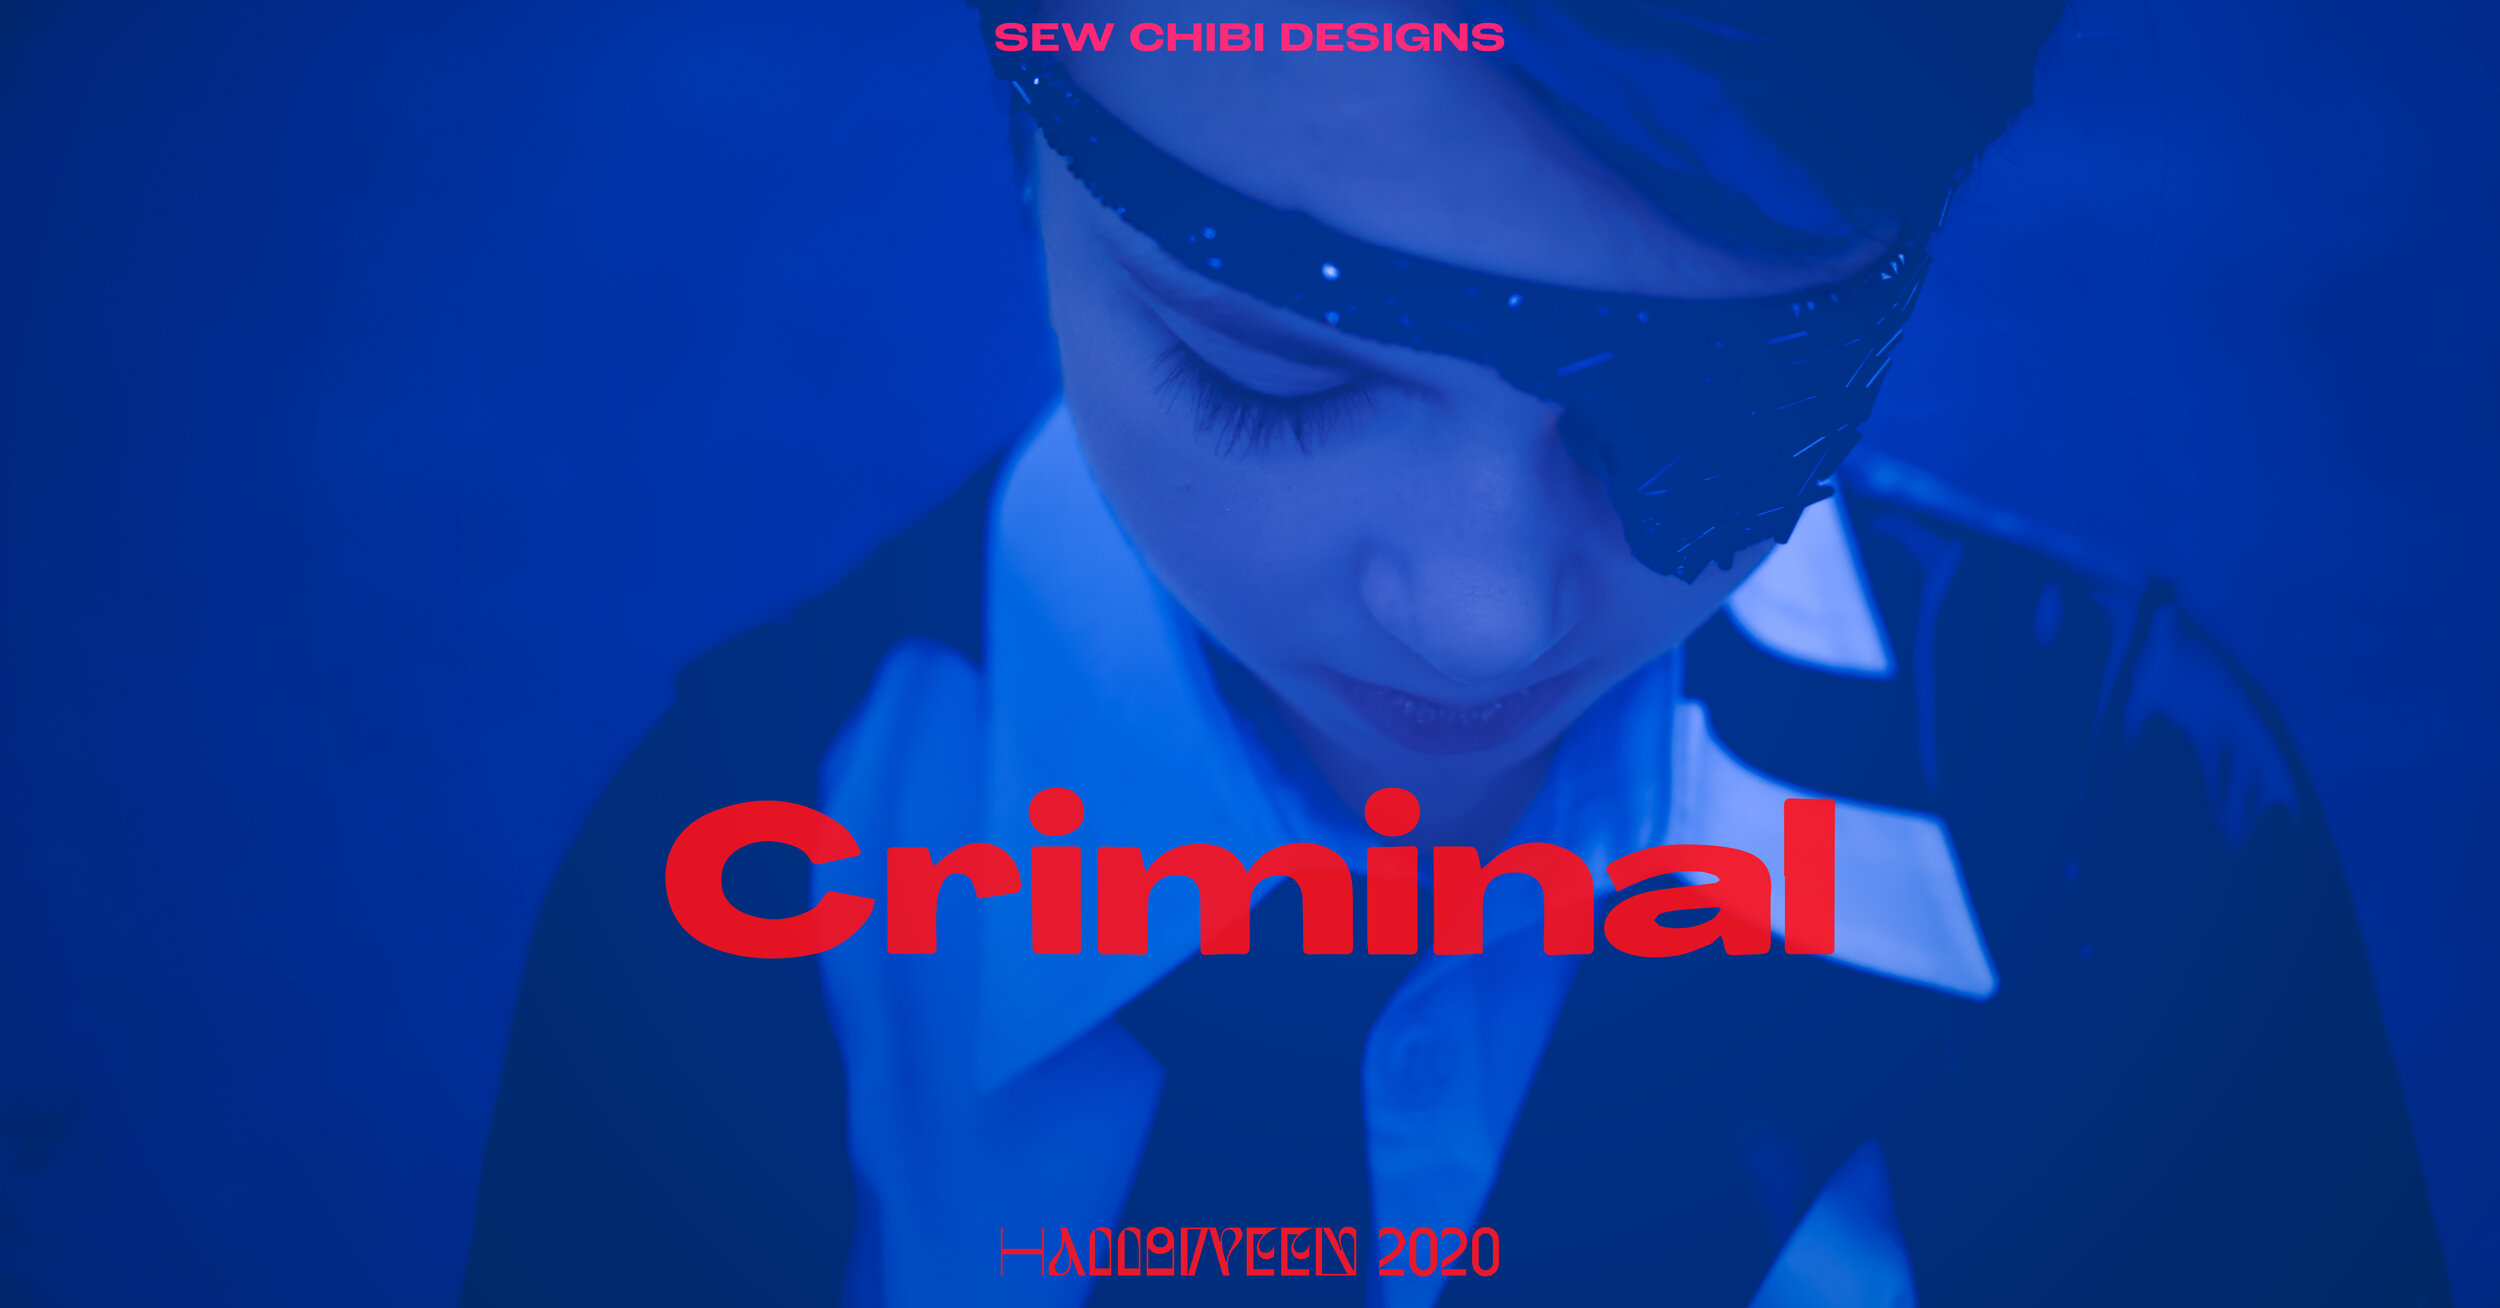 Chibi Lee Taemin "Criminal"  Cosplay by Sew Chibi Designs for Halloween  #kpop #SHINee 2020 kids fashion